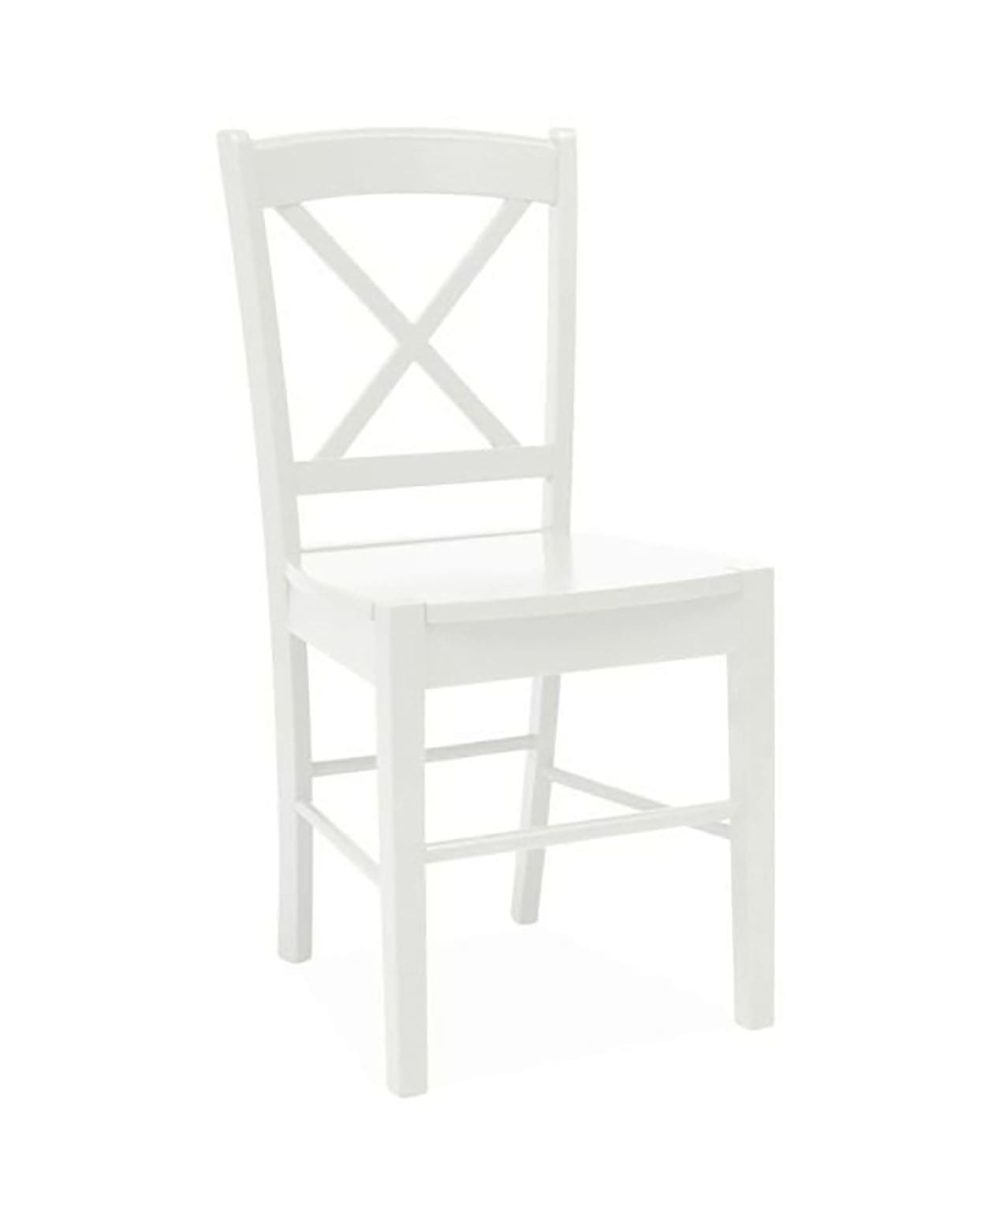 lynwood-chair-white-profile.jpg